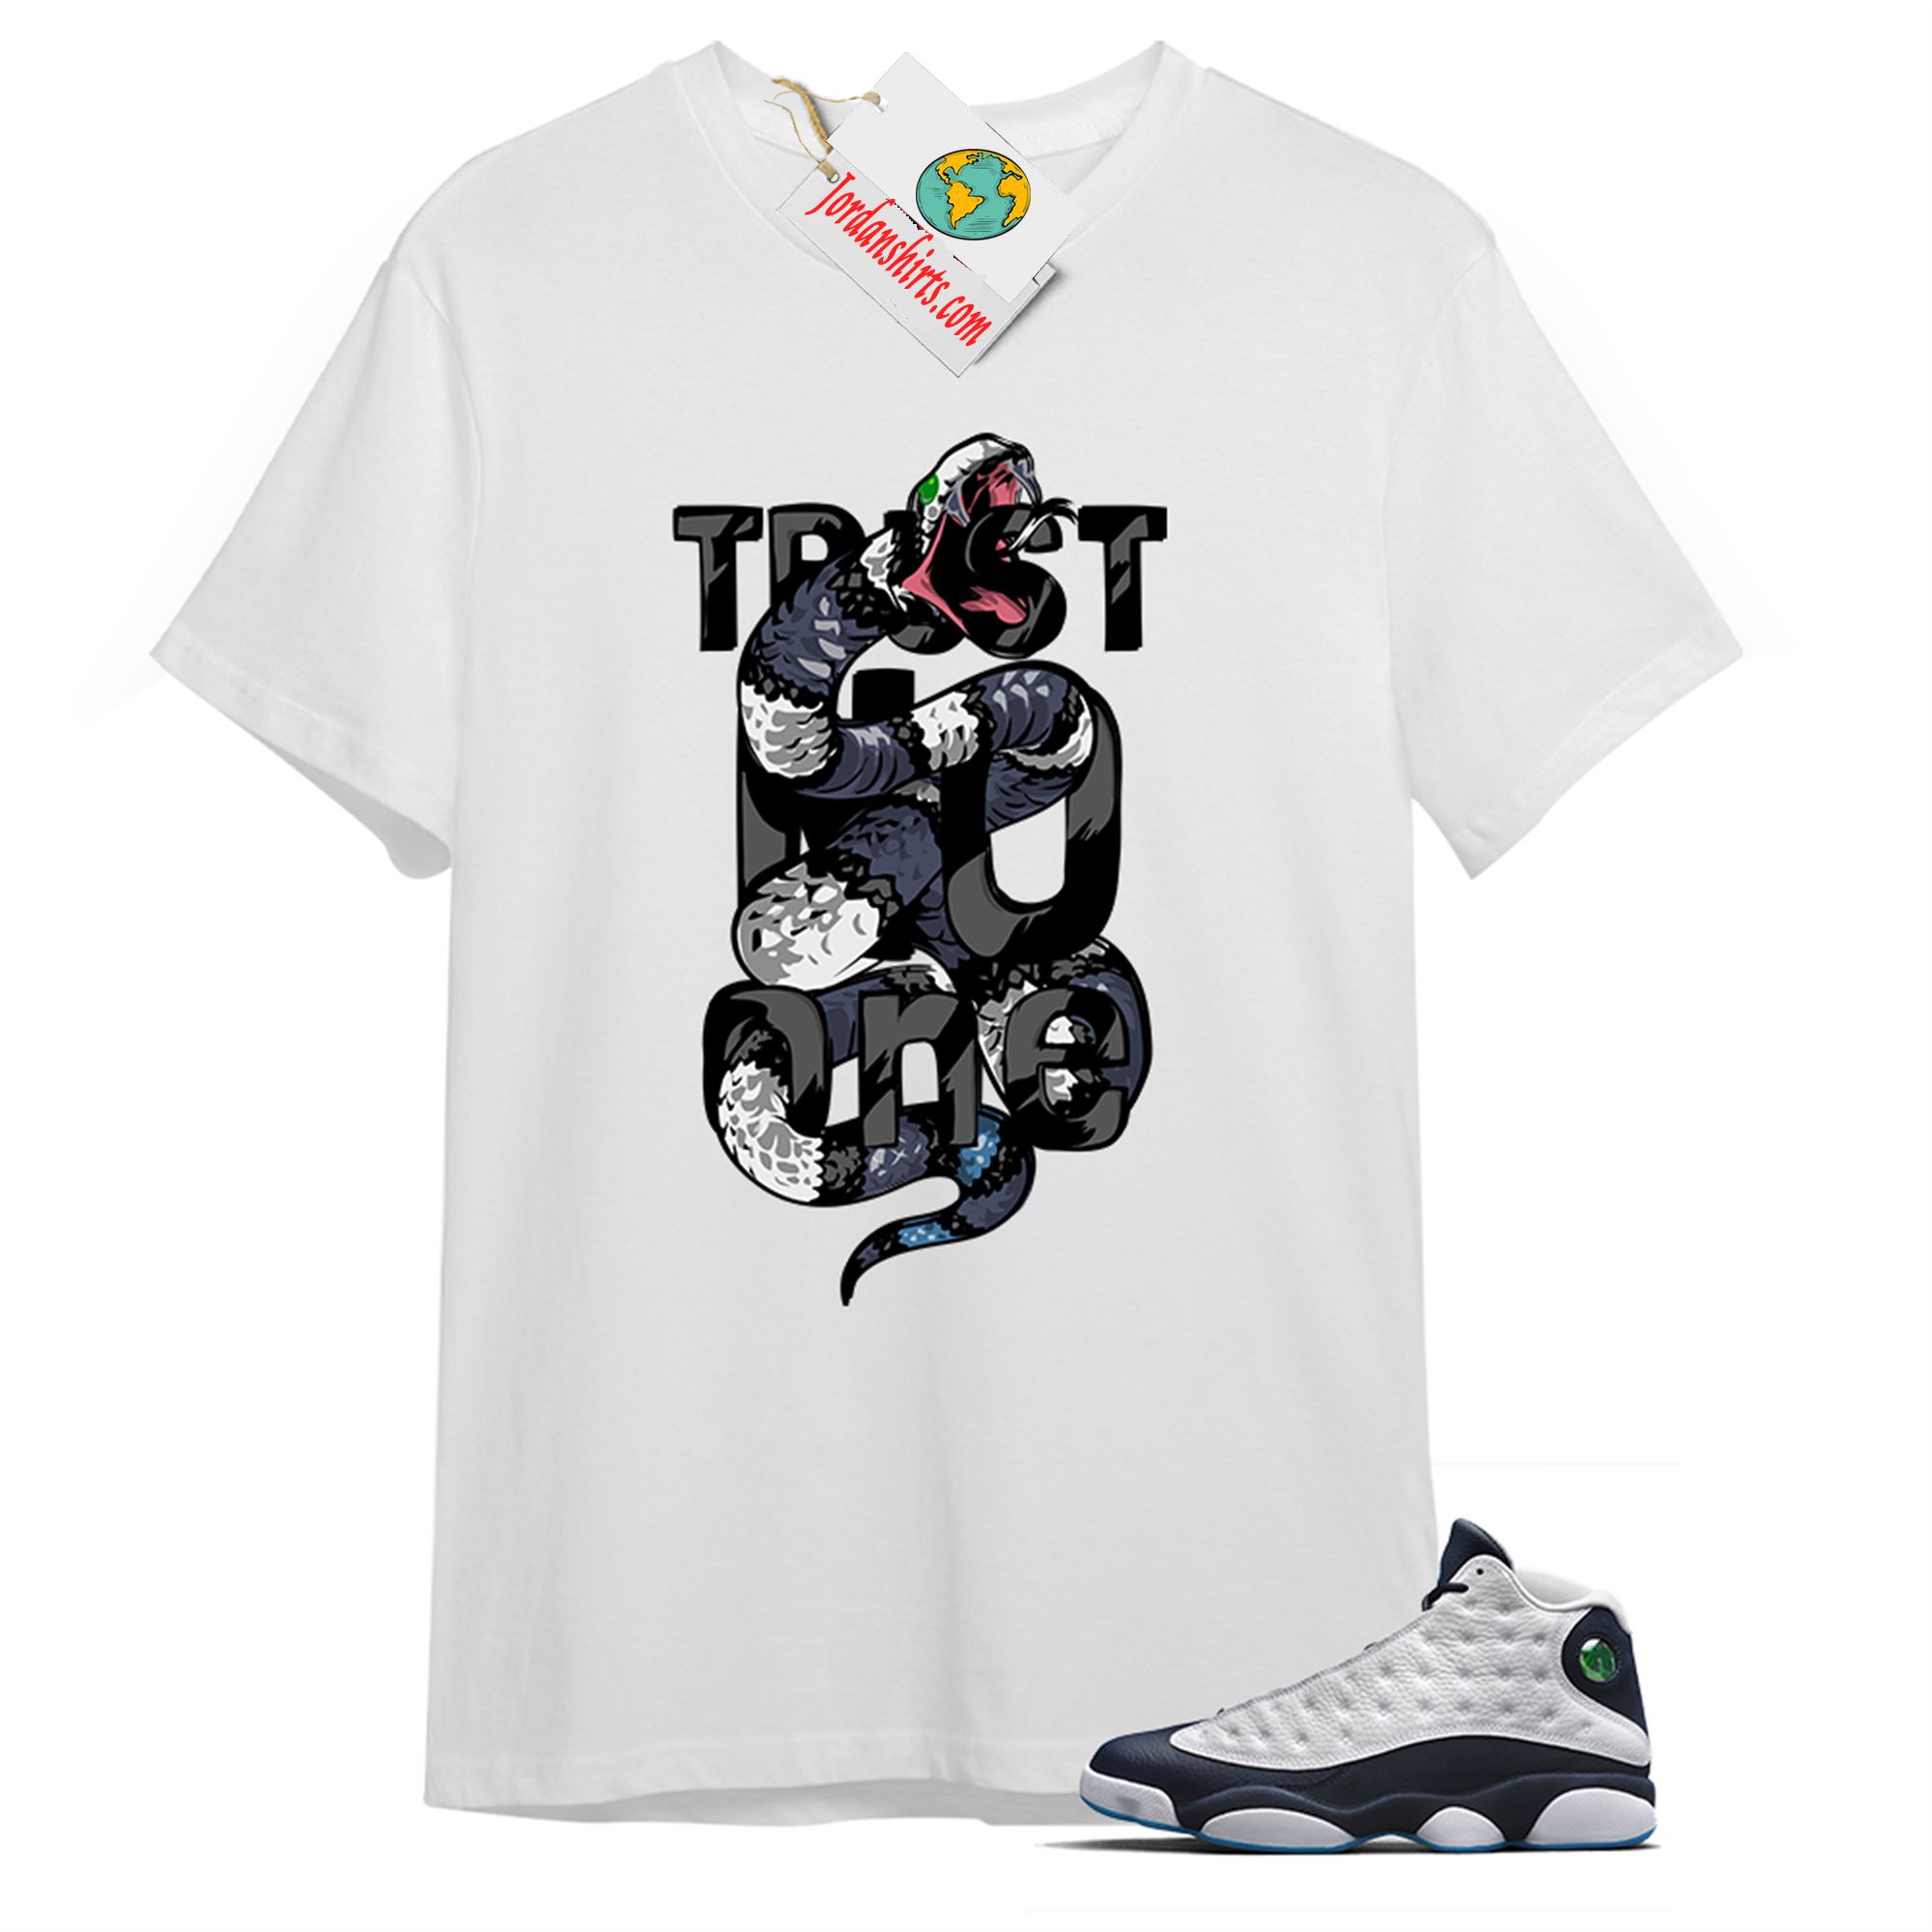 Jordan 13 Shirt, Trust No One King Snake White T-shirt Air Jordan 13 Obsidian 13s Size Up To 5xl